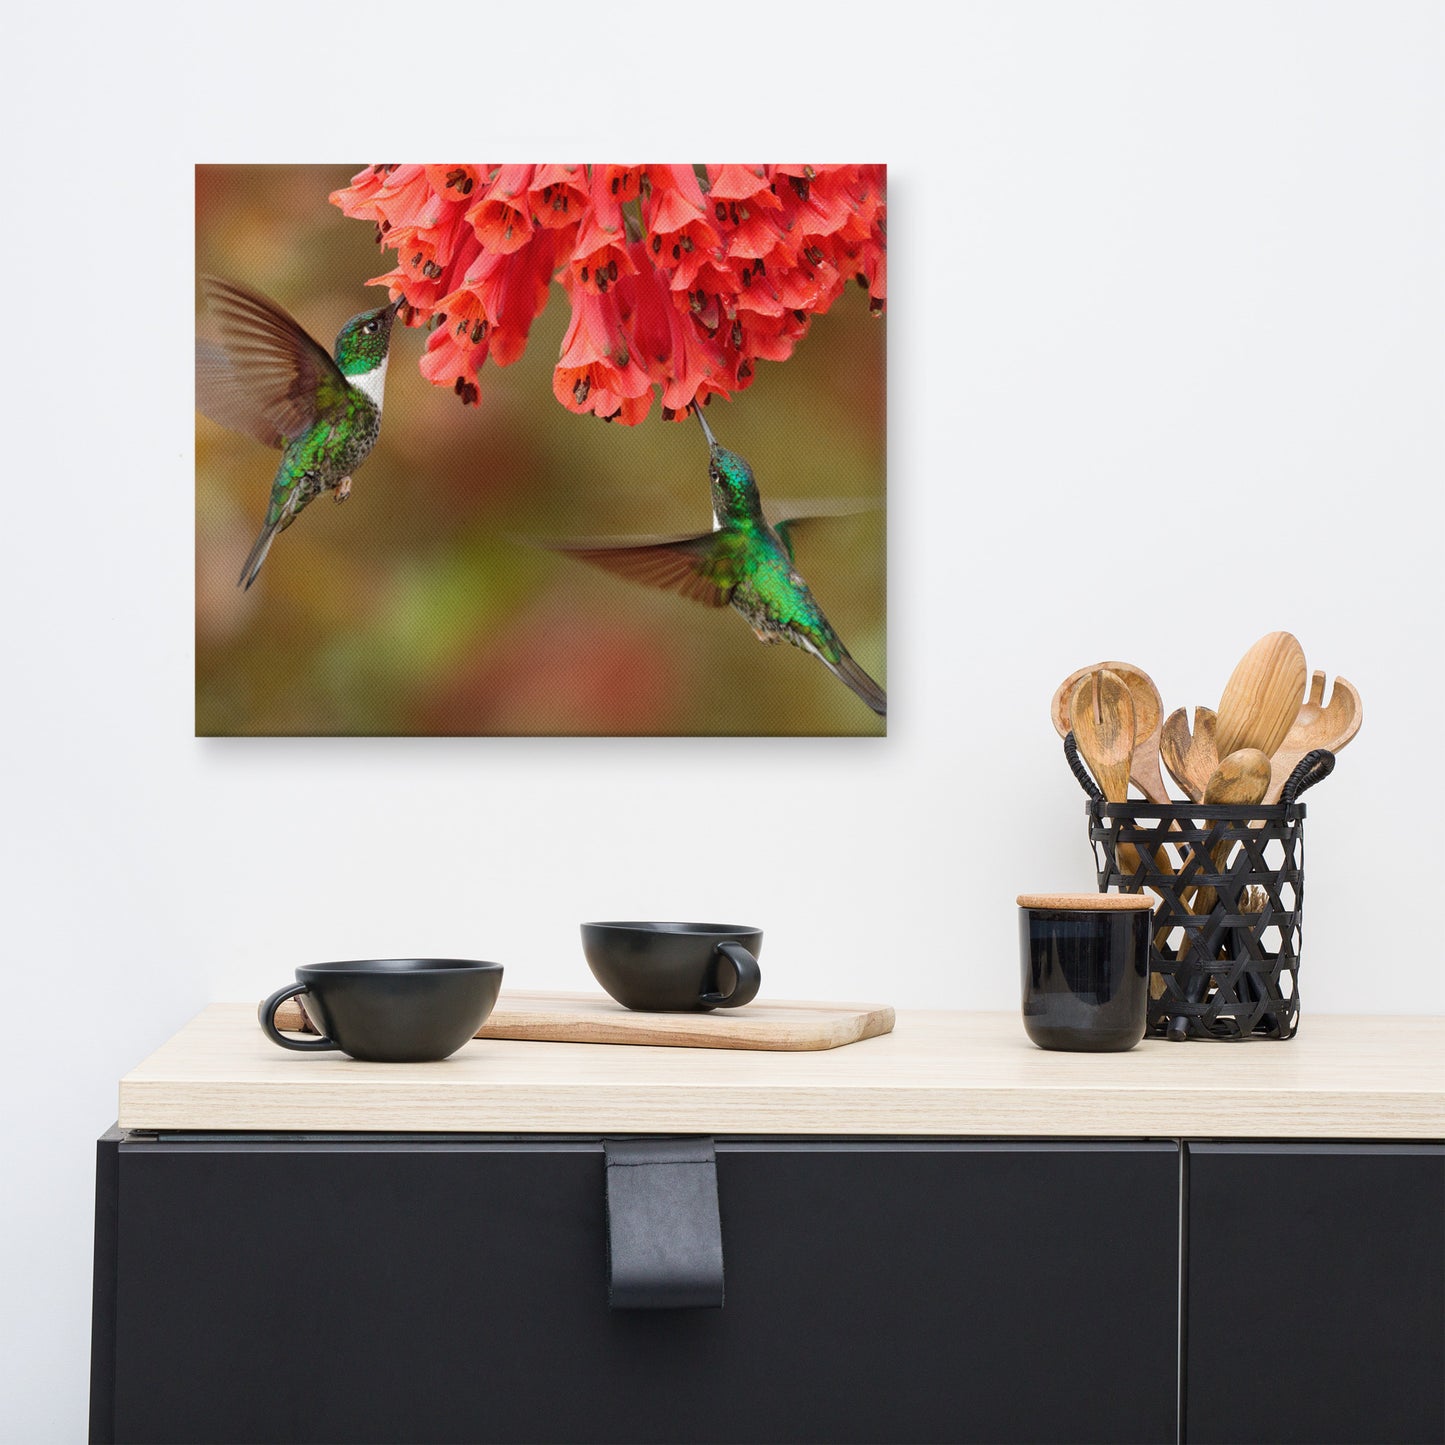 Hummingbirds with Reddish-Orange Flowers Animal Wildlife Photograph Canvas Wall Art Prints